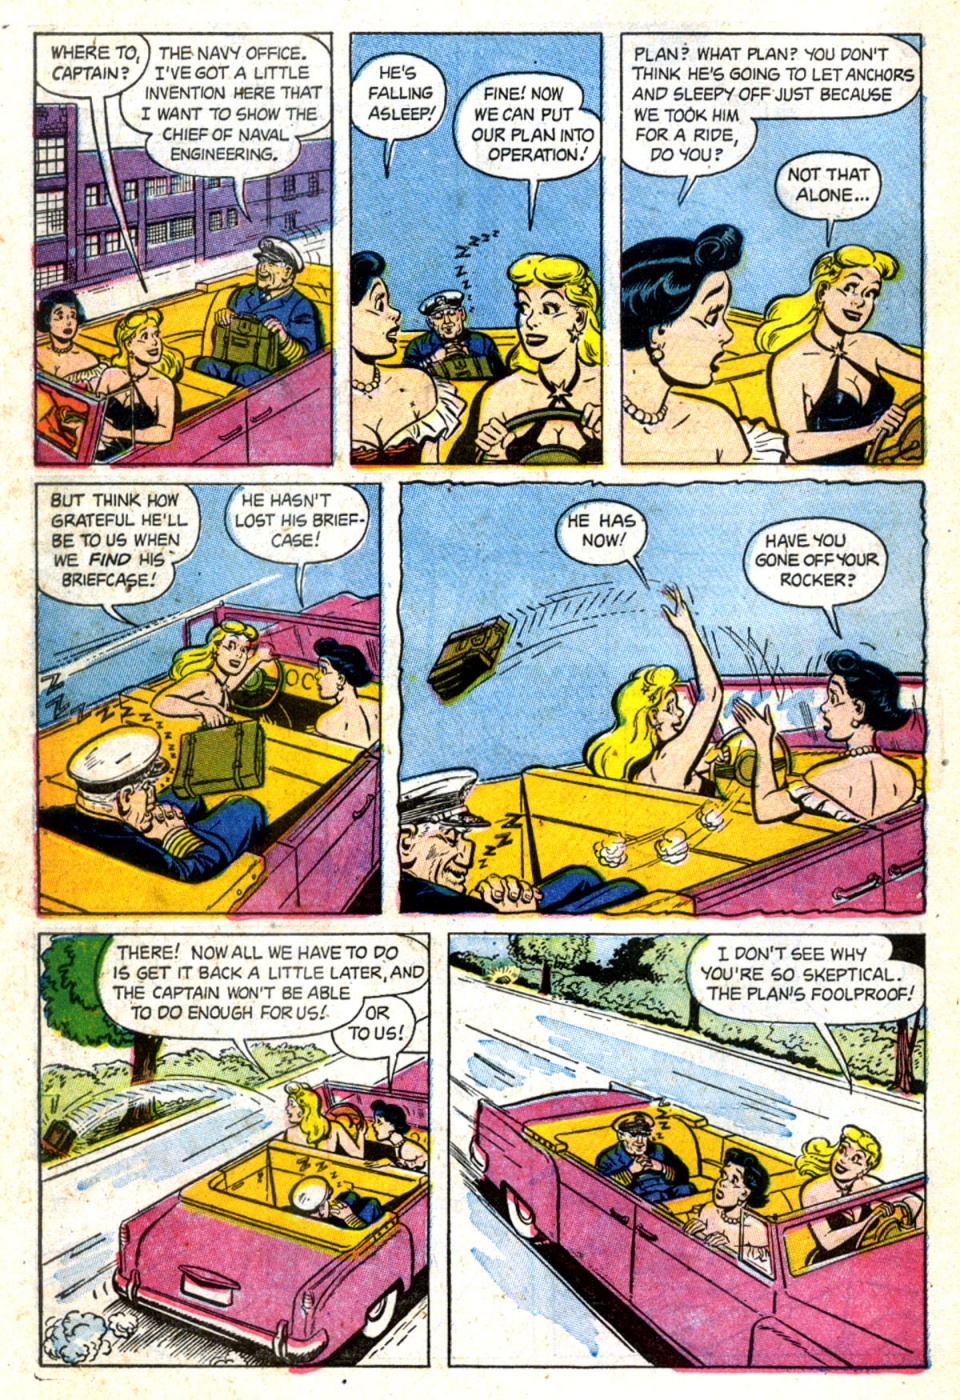 Anchors the Salt Water Daffy - Comics (c) (10)